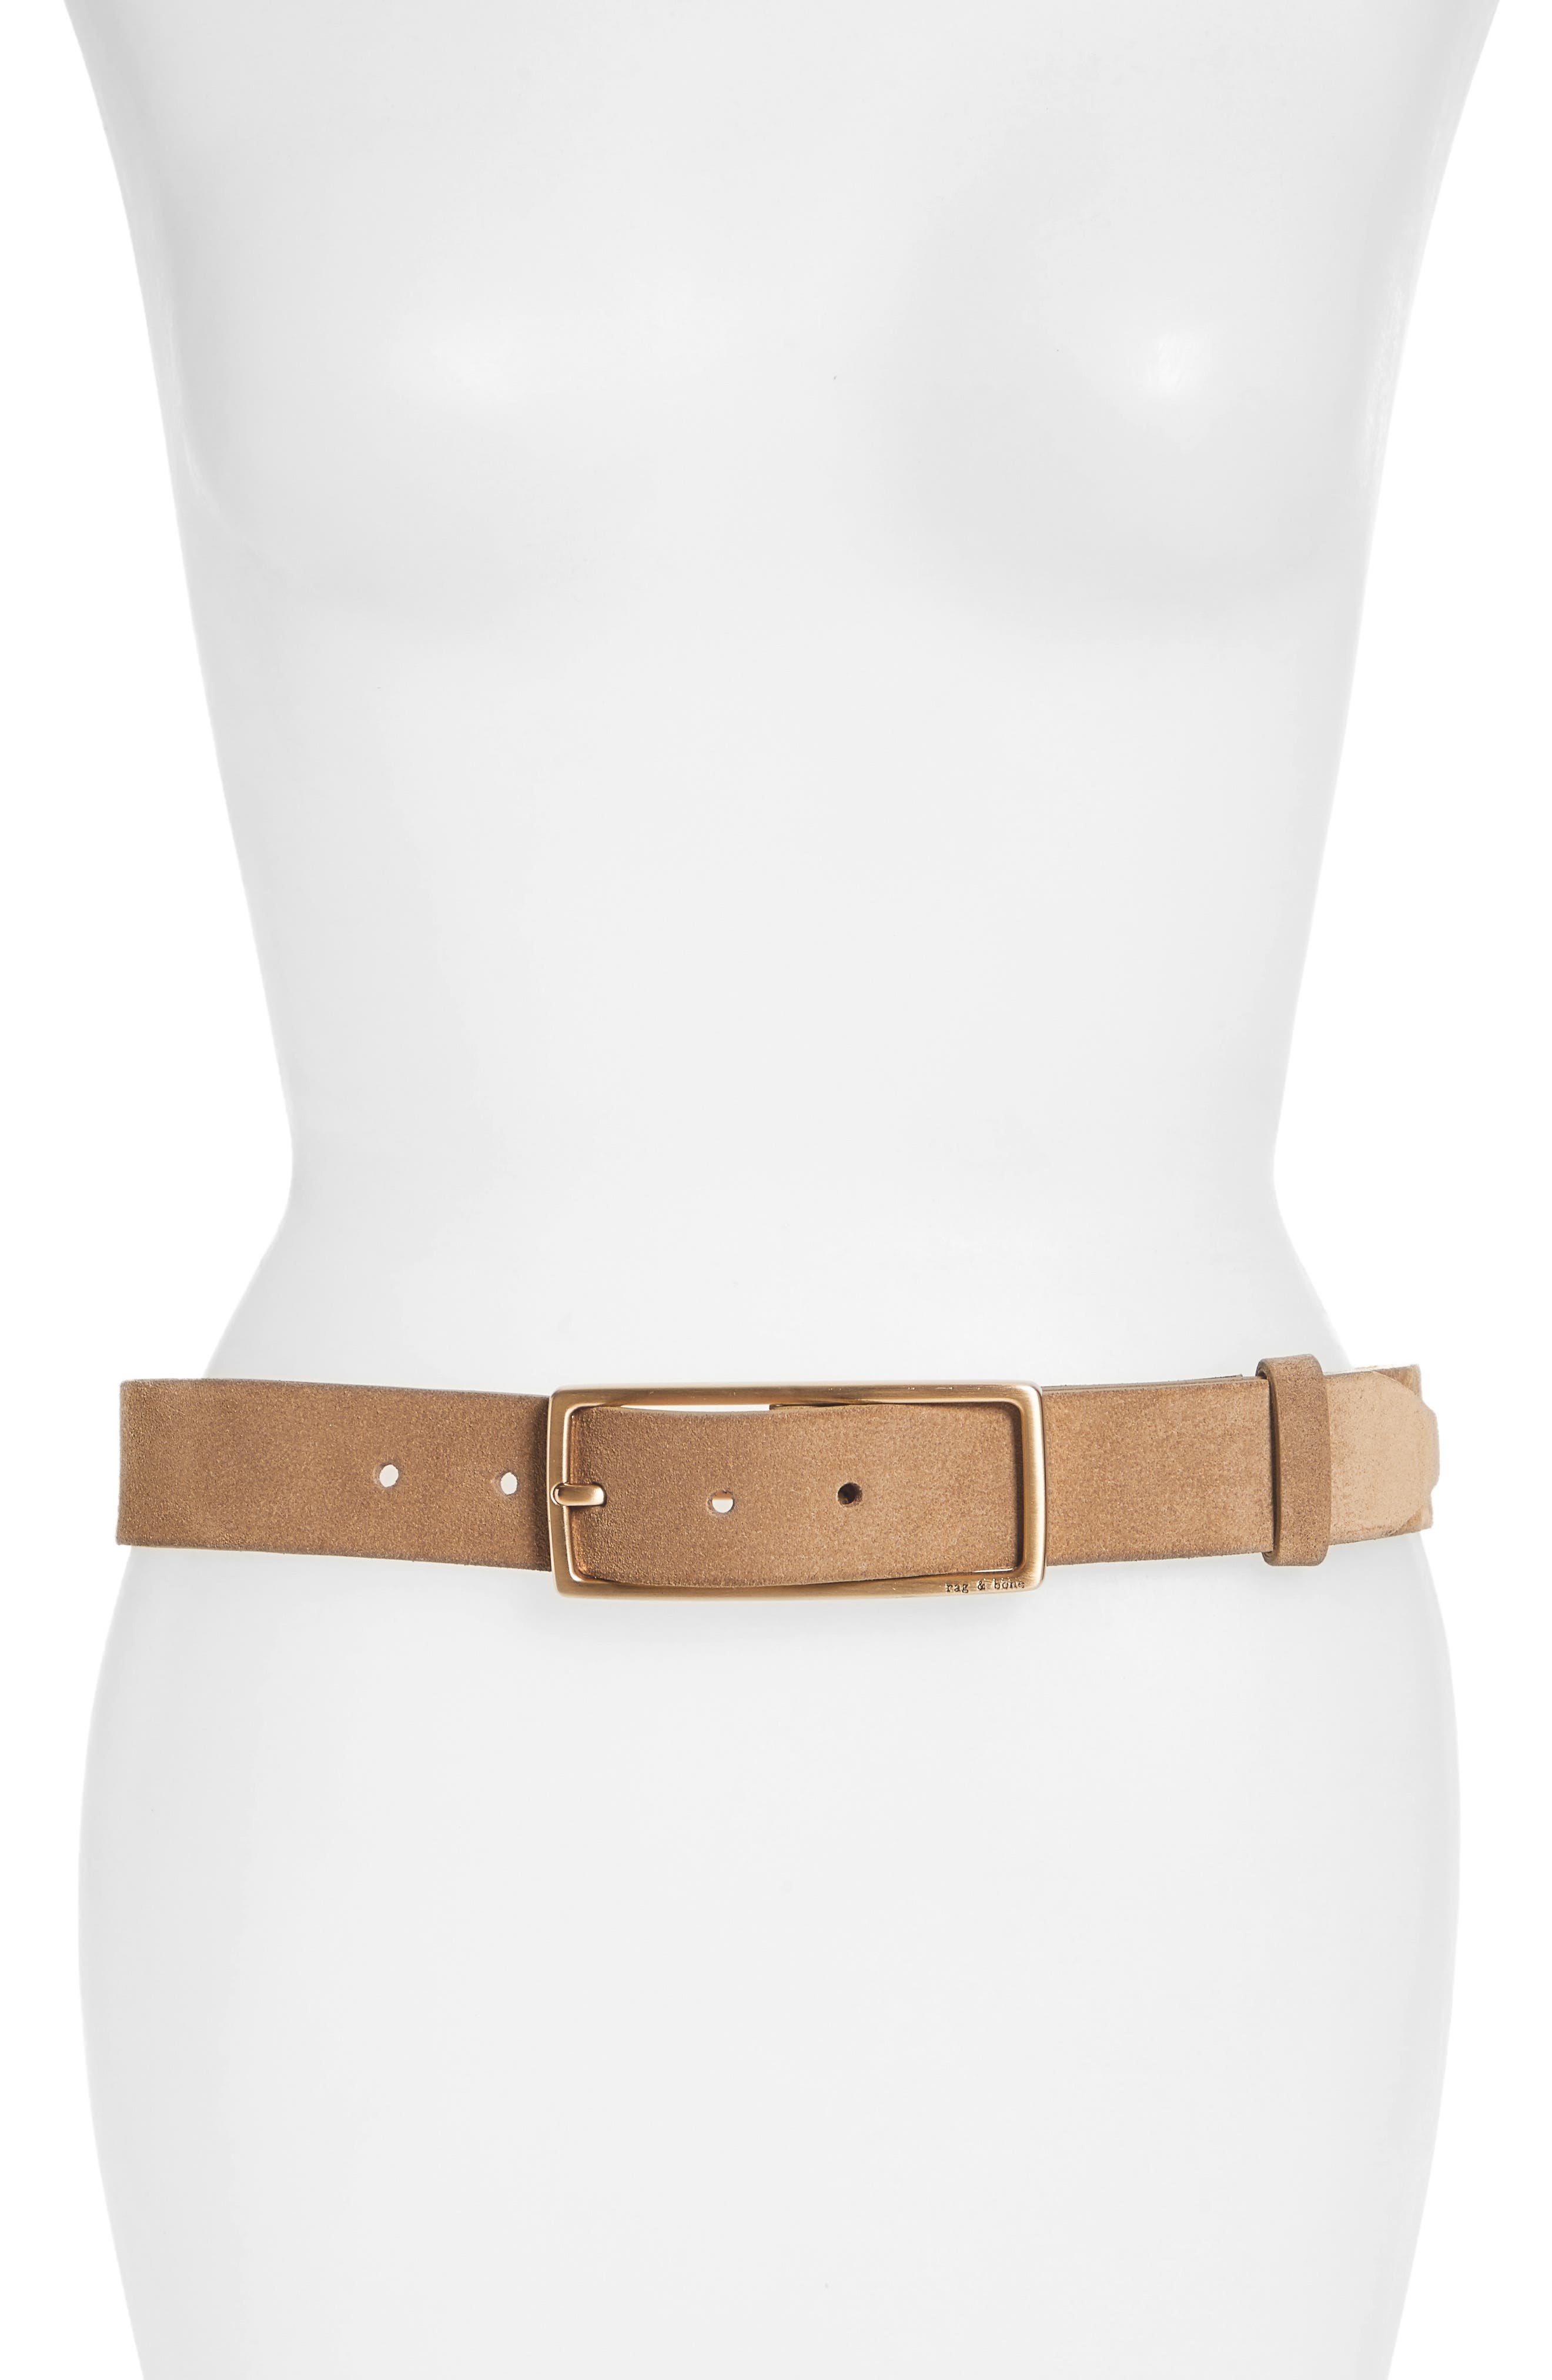 Fashion Women's Belt Narrow Skinny Low Waist Thin Leather Loop Bow Belt gifts 